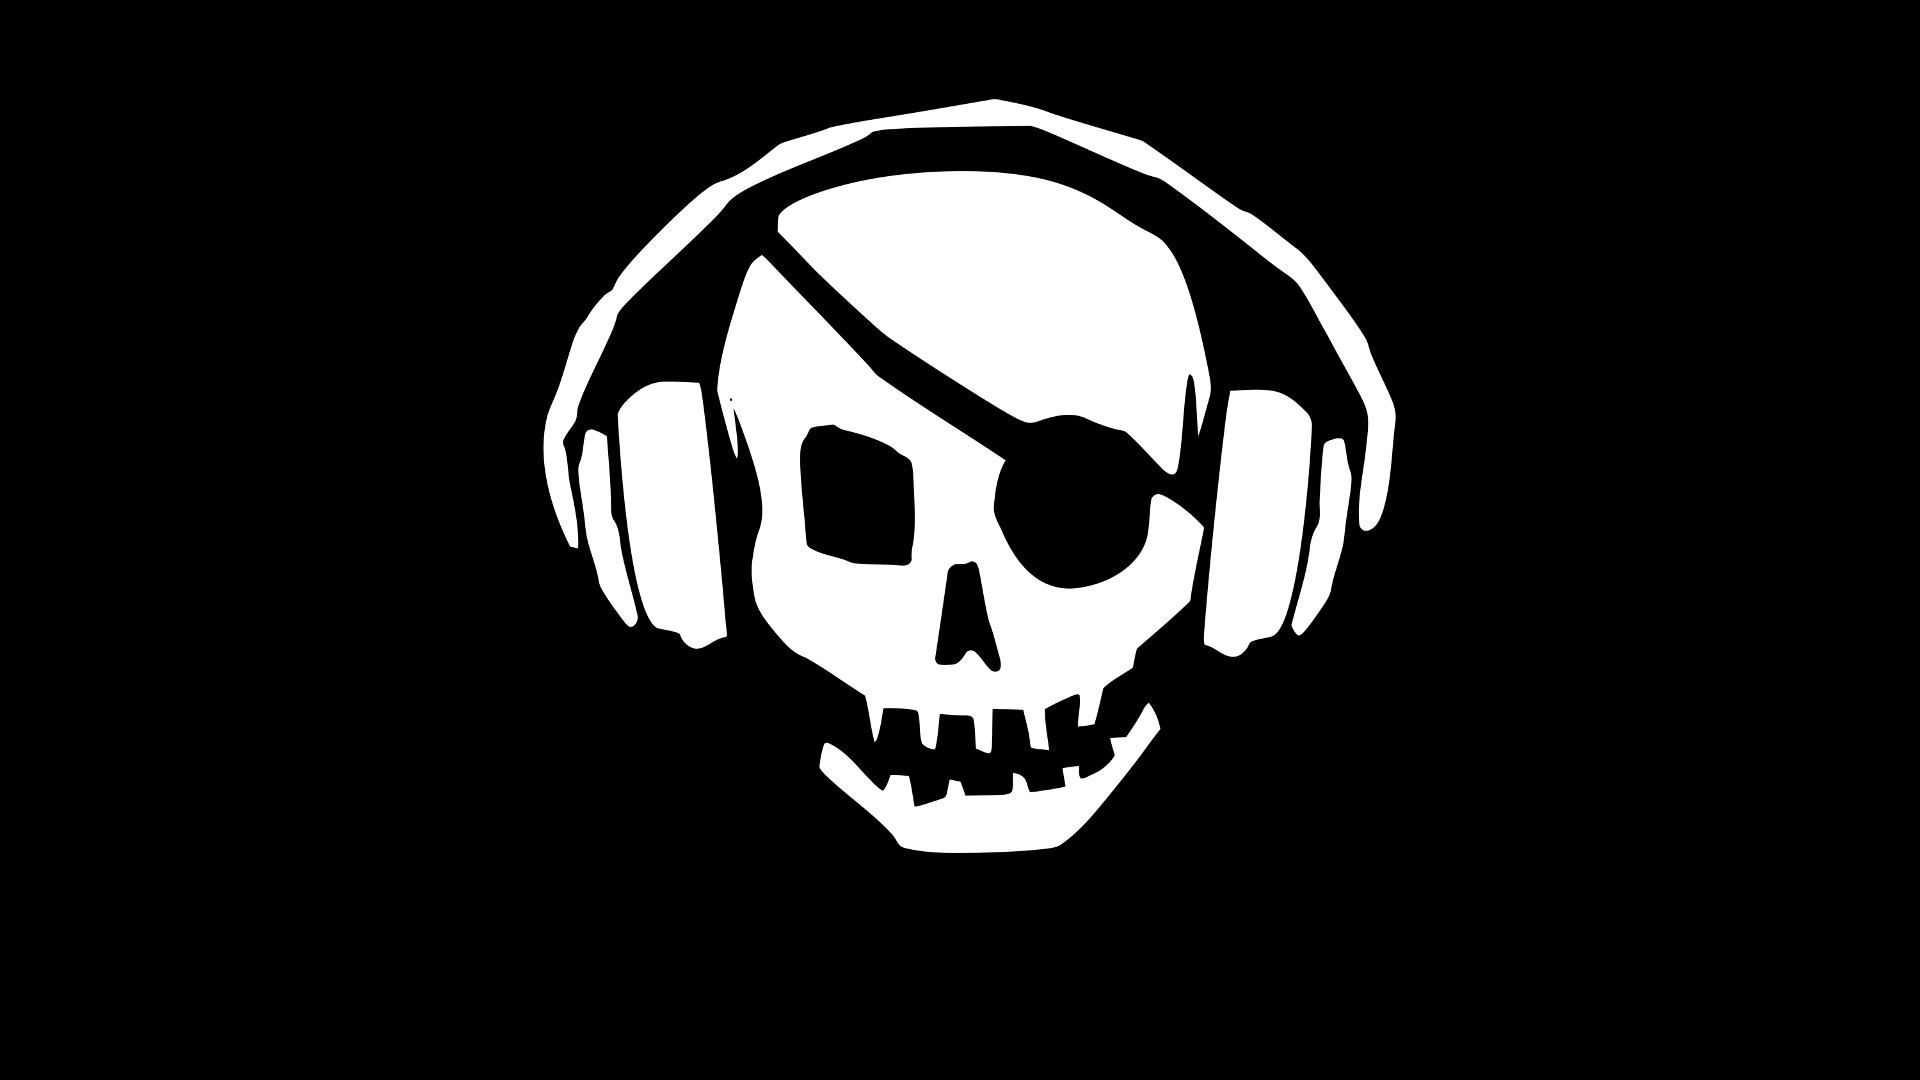 files/314-headphones-skull-minimalism-black_background-eye_patch-black.png